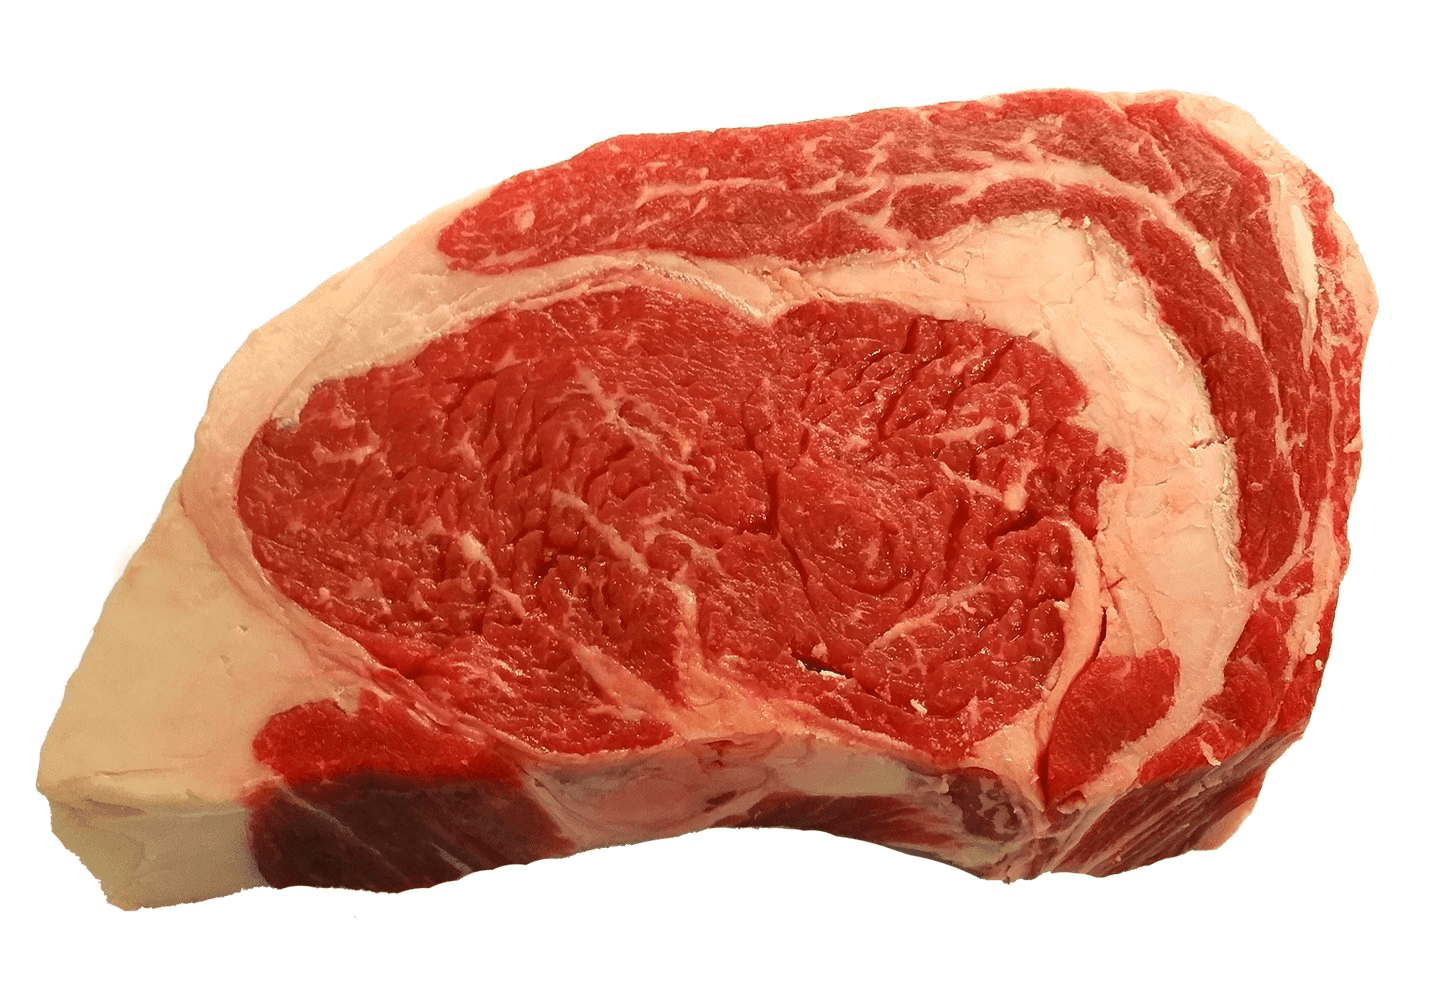 Fresh Local Meat Delivery - Black Angus Boneless Rib Eye Steak 12 Ounce